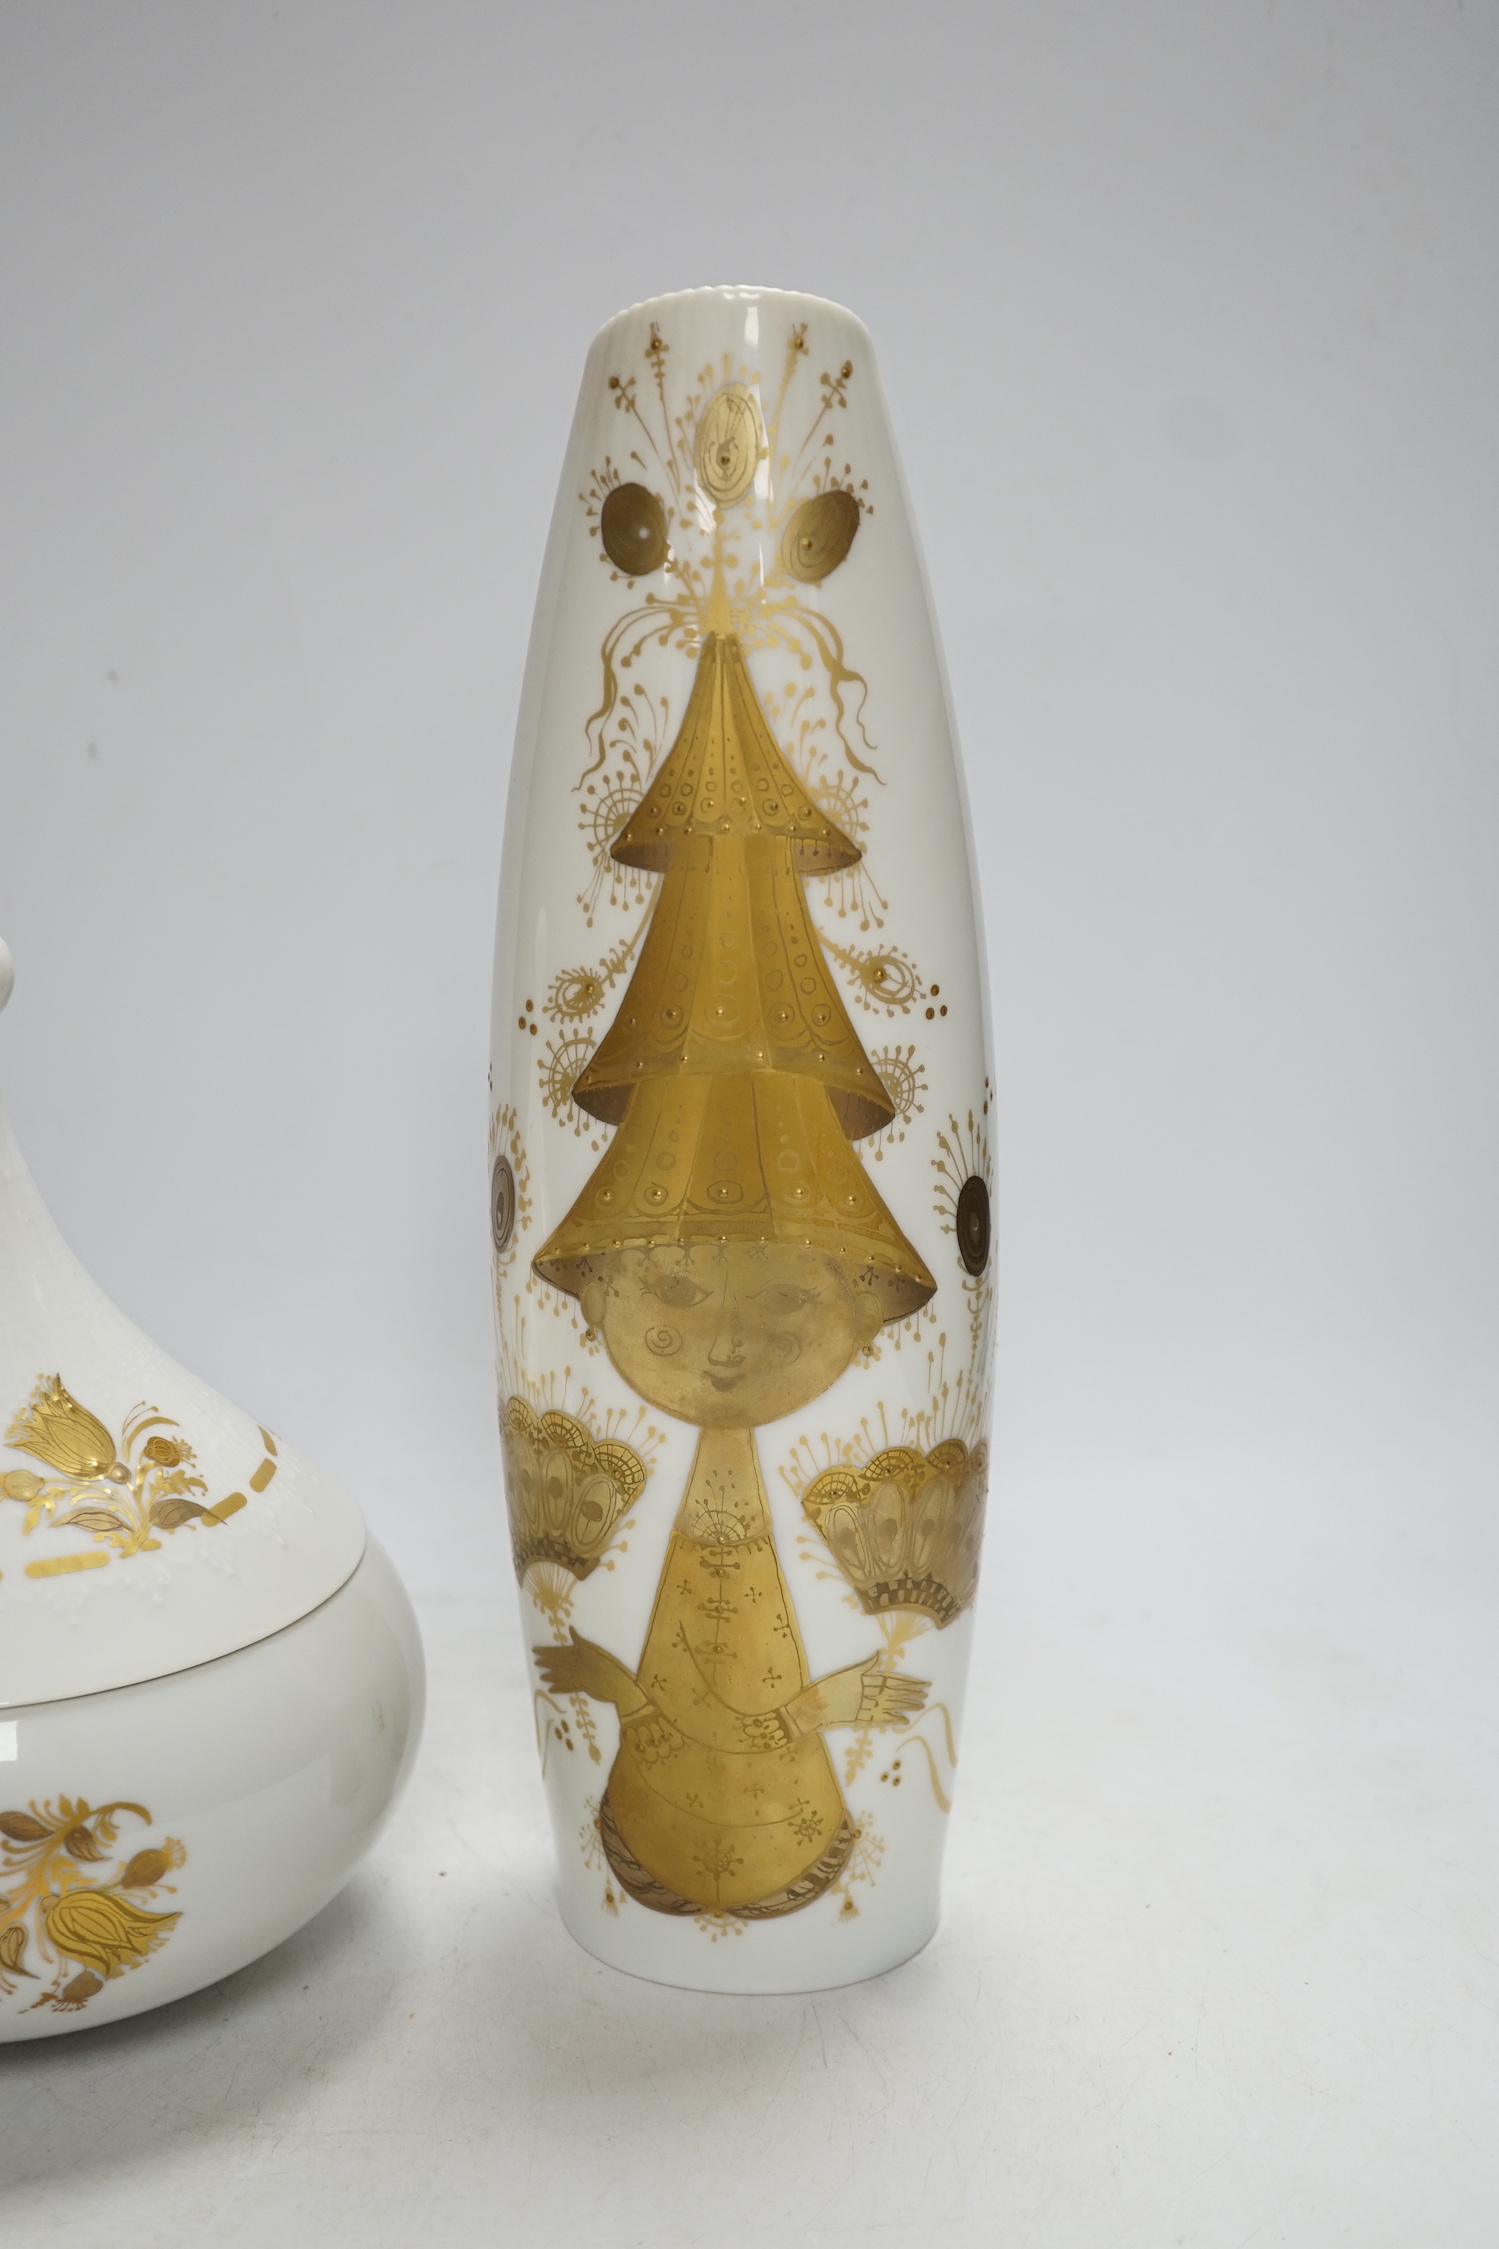 Bjørn Wiinblad for Rosenthal Germany; a Studio Line figural gilt decorated vase, and a similar gilt decorated onion shaped jar and cover, vase 31cm high